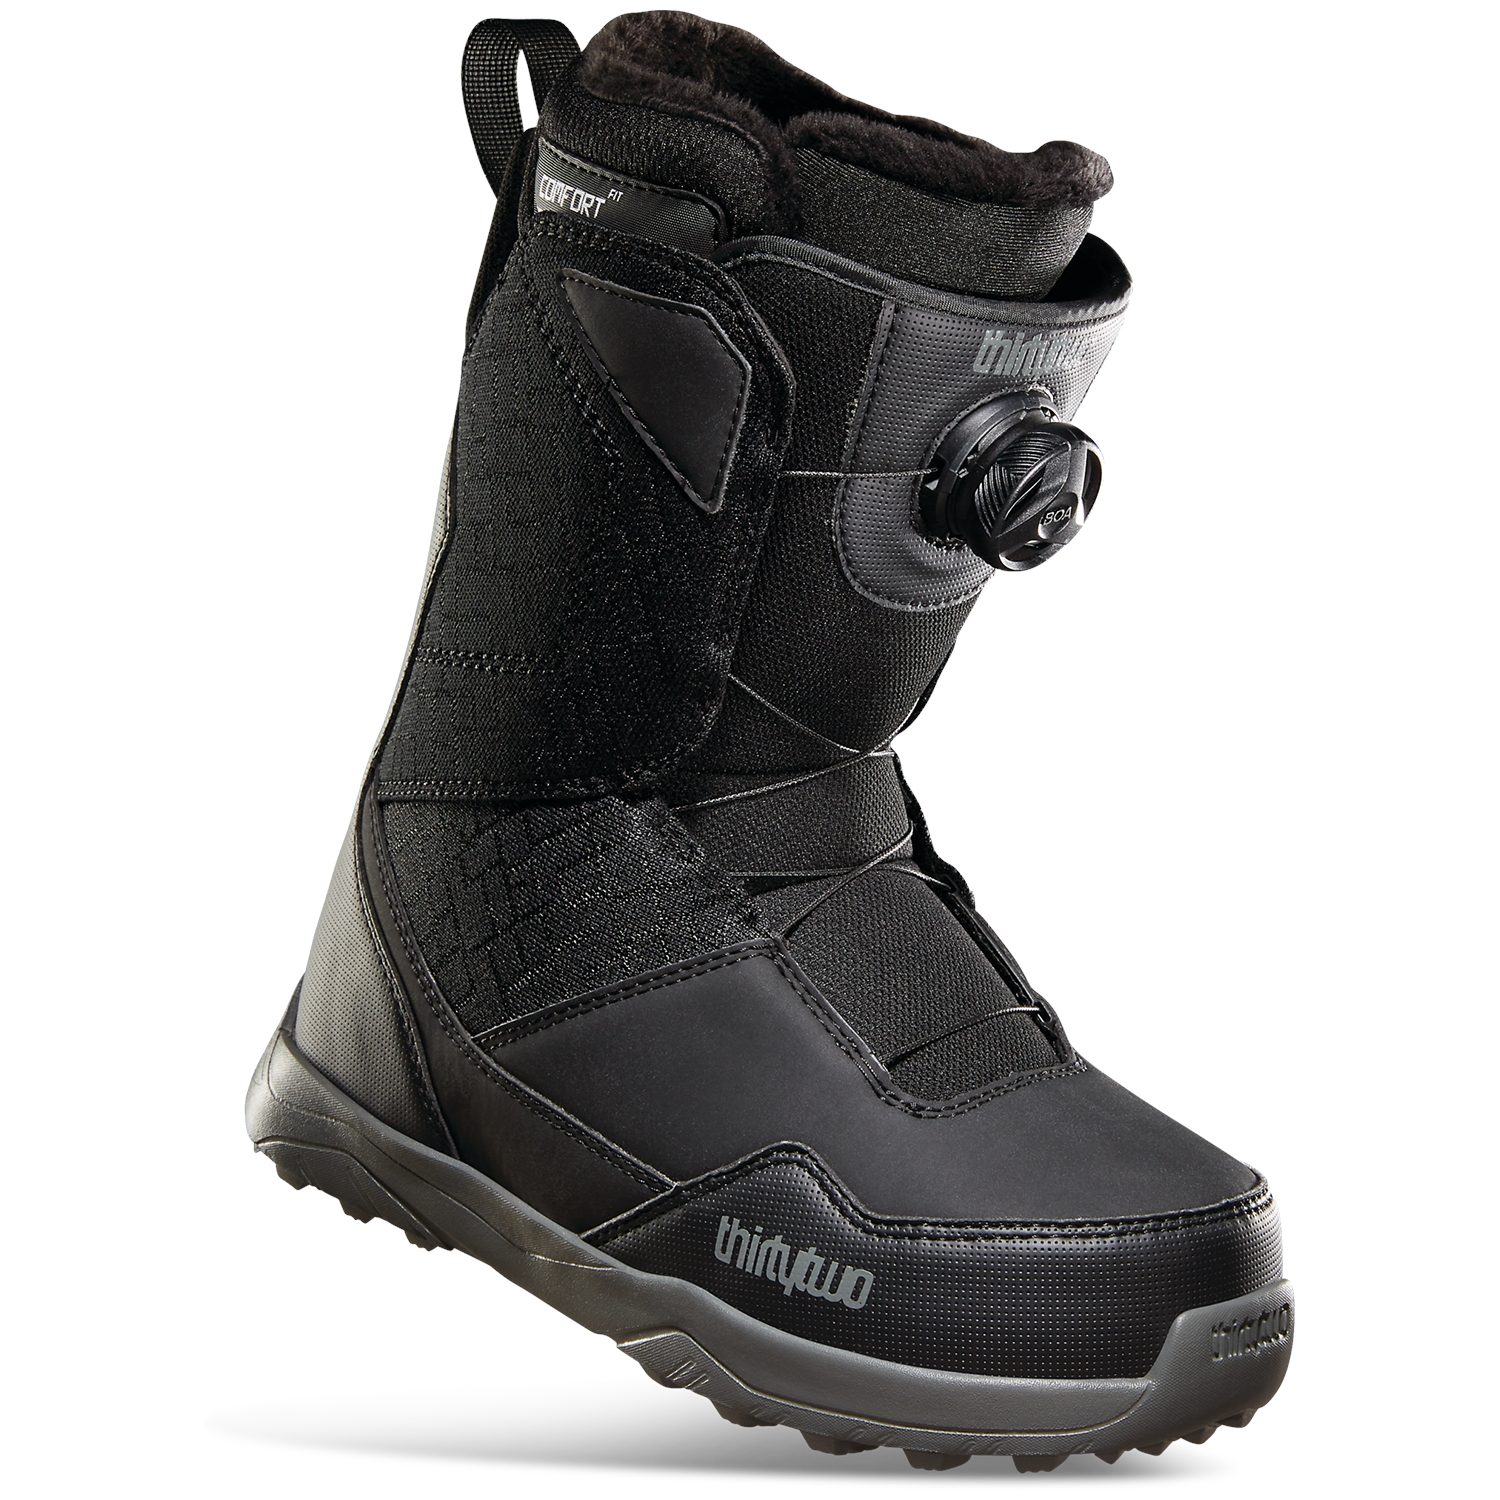 Ботинки Shifty Boa для сноуборда, черный